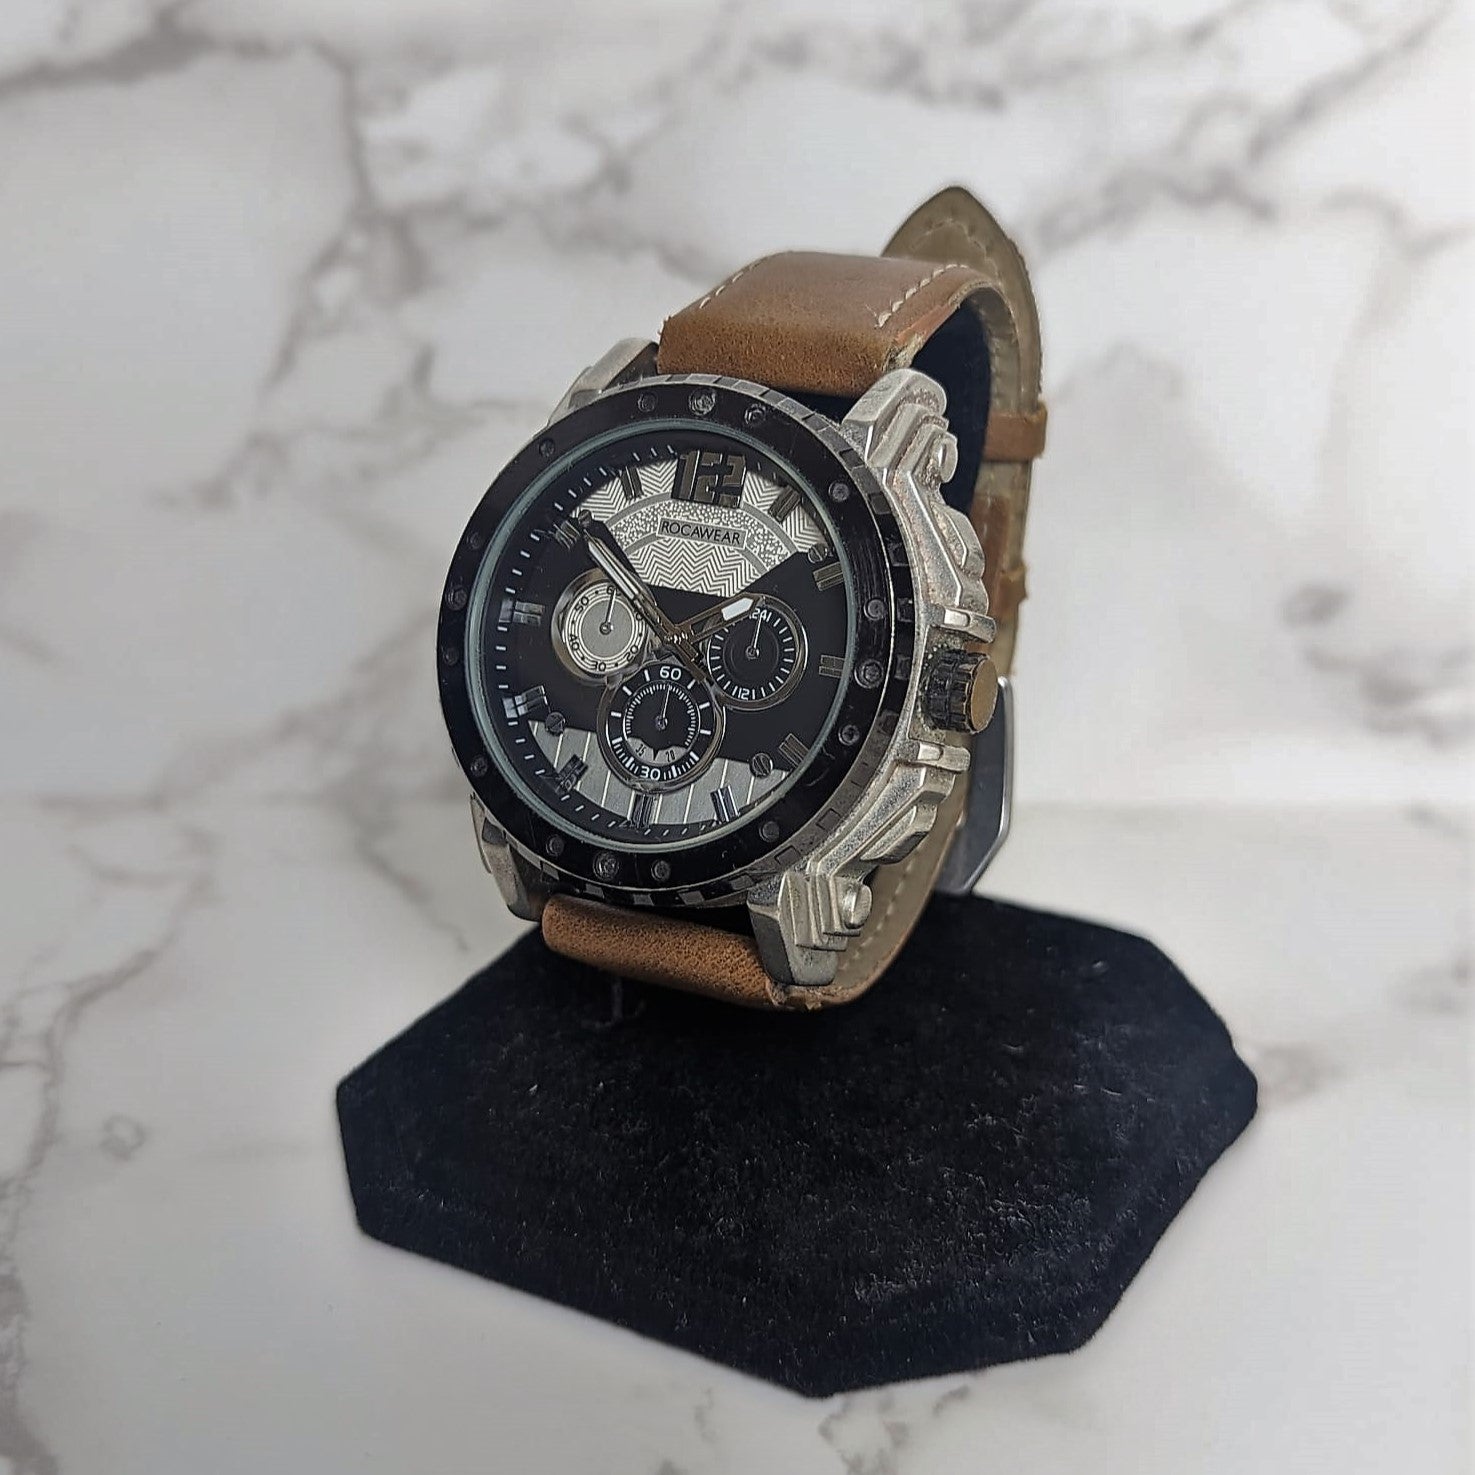 Rocawear Quartz Watch for sale. – Ogham Timepieces - Dublin